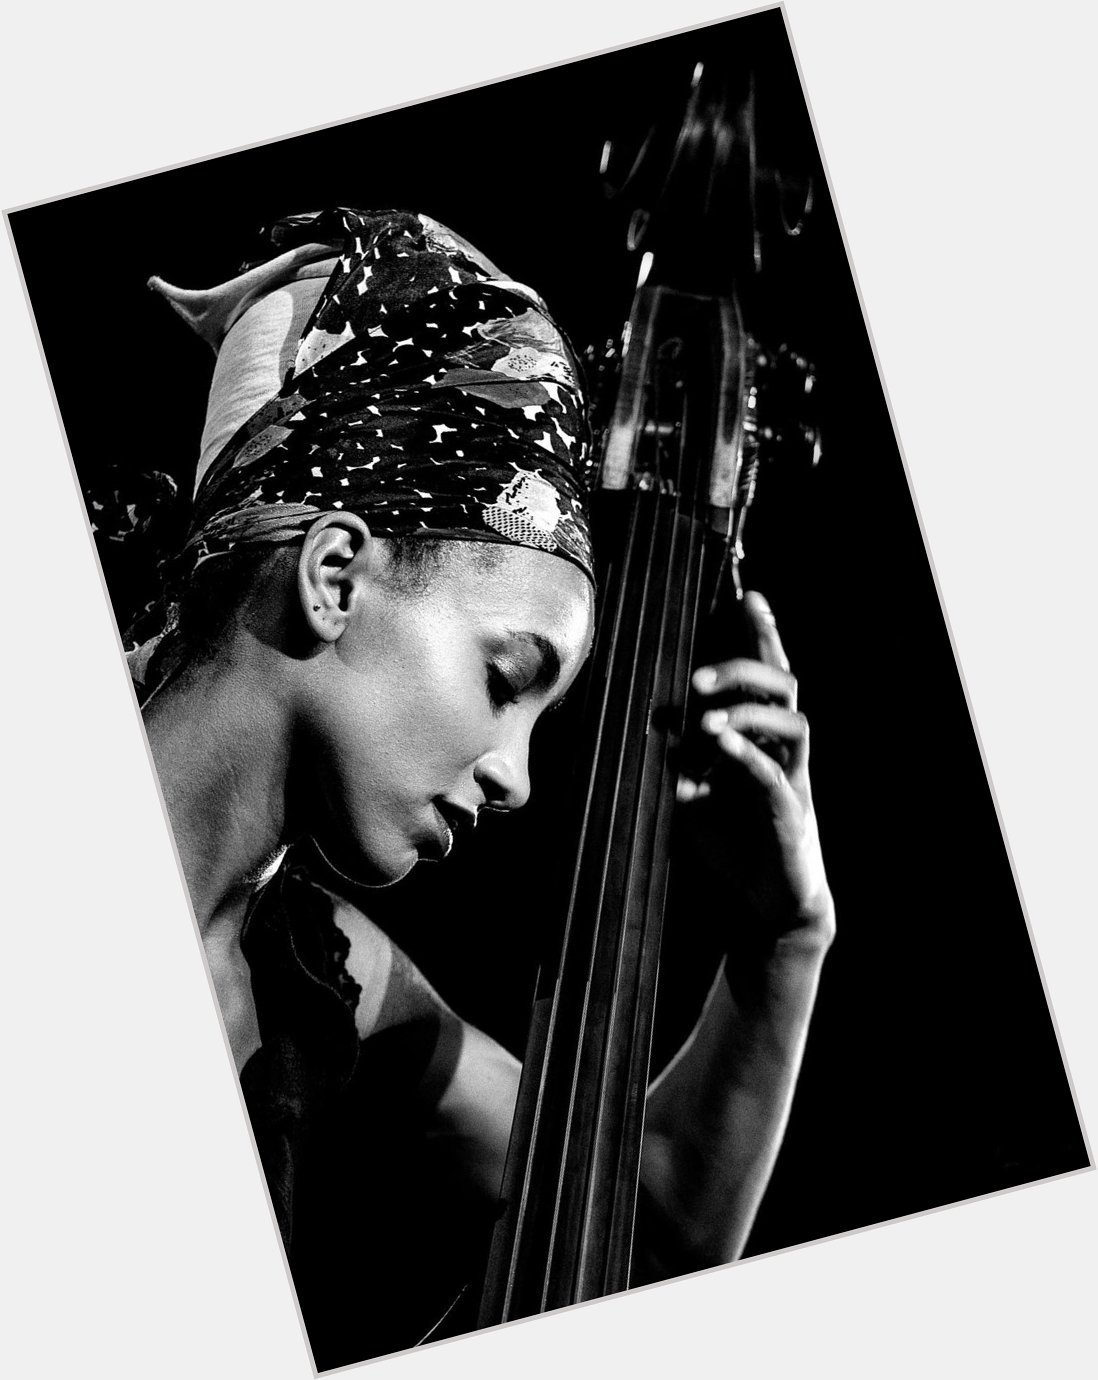  Bassist and composer Esperanza Spalding born on this day, in 1984.

photos: Andrea Palmucci 